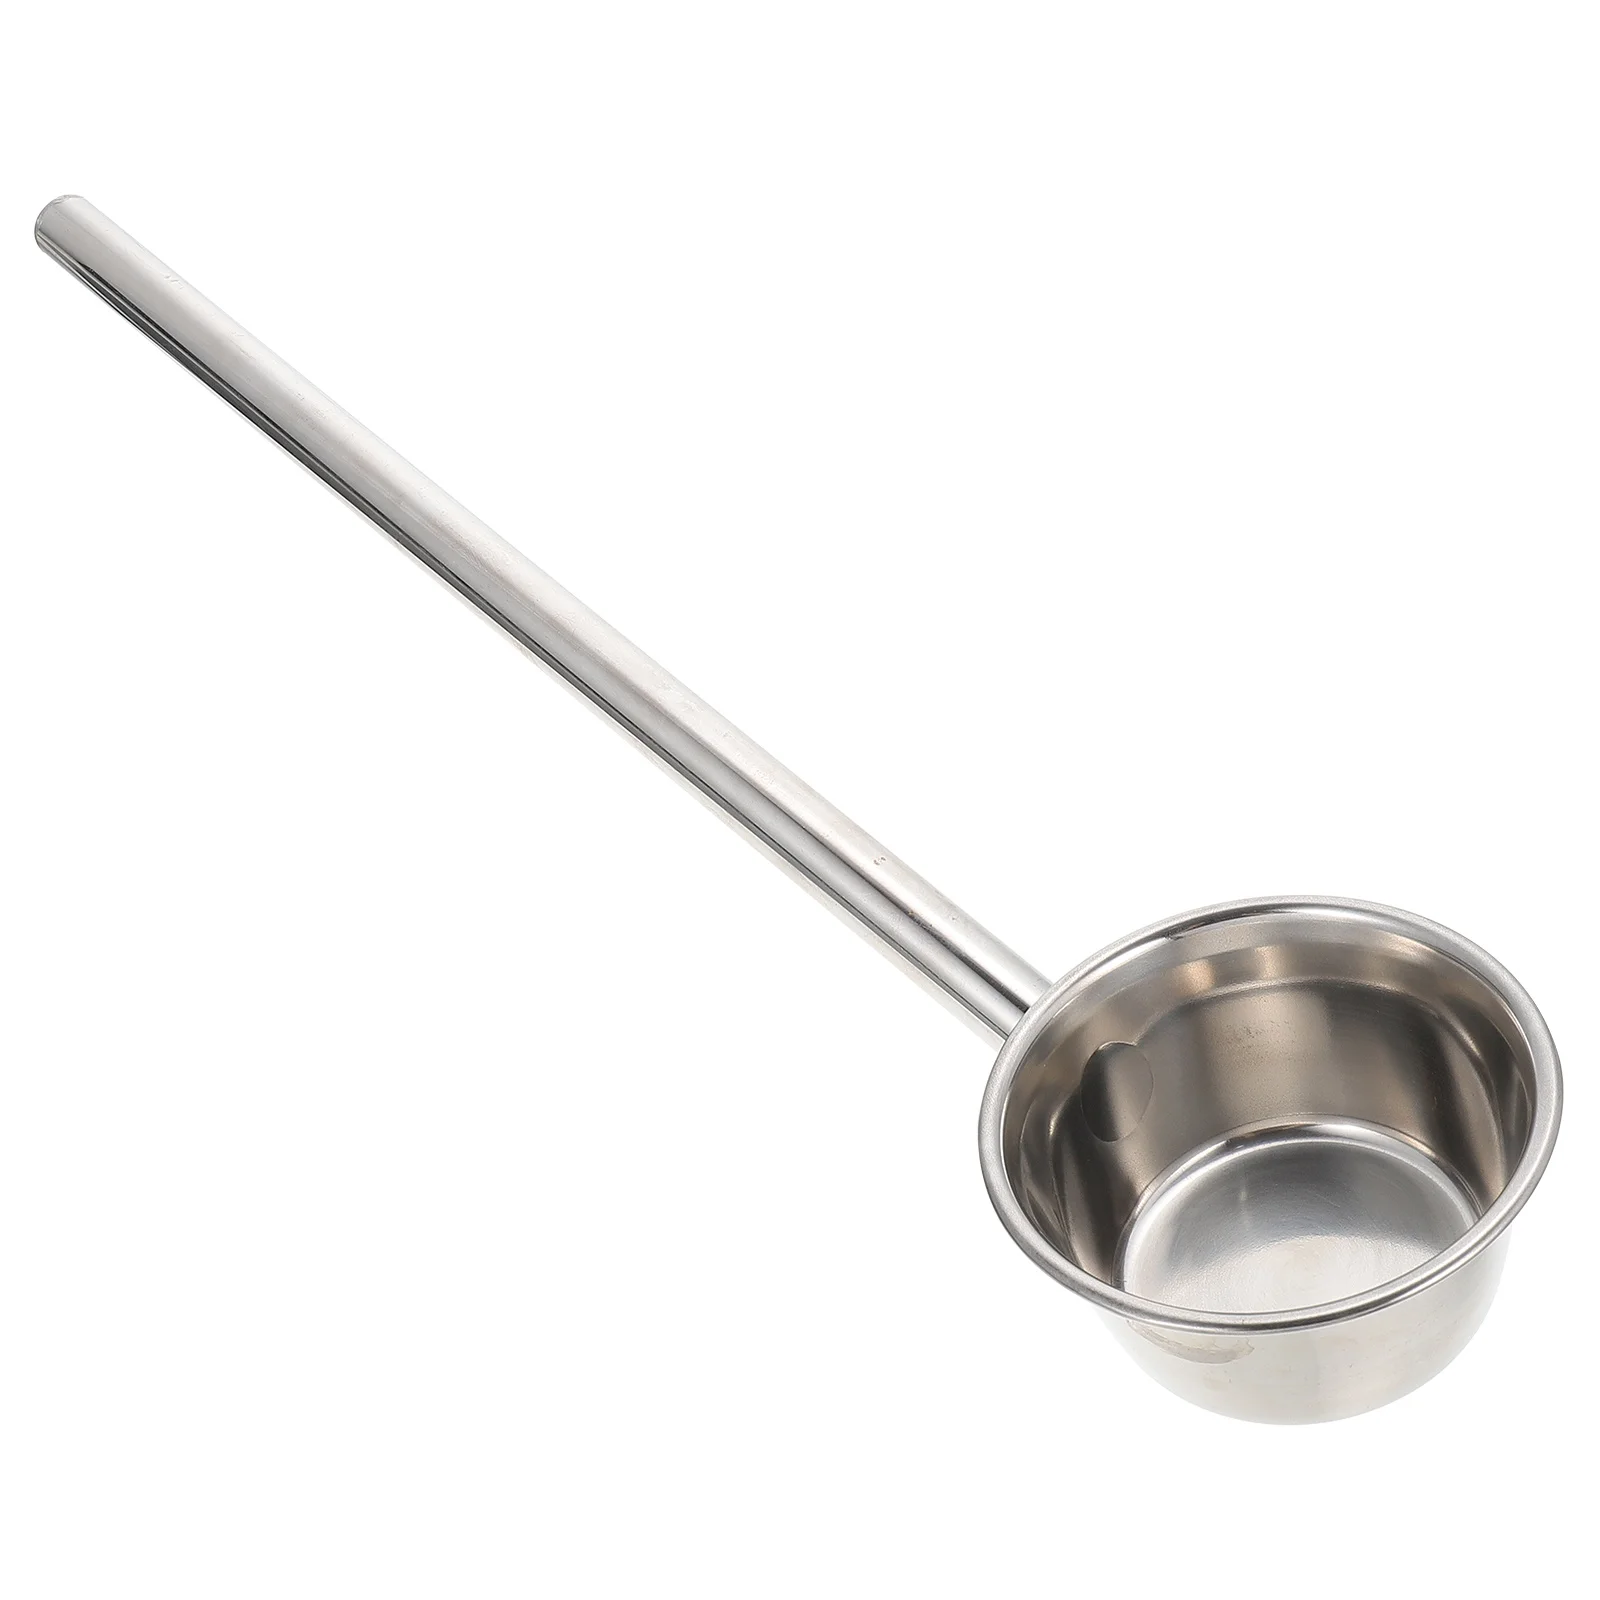 

Ladle Water Spoon Scoop Dipper Kitchen Bath Ladles Soup Stainless Steel Spoons Handle Cup Bathroom Washing Serving Hair Large